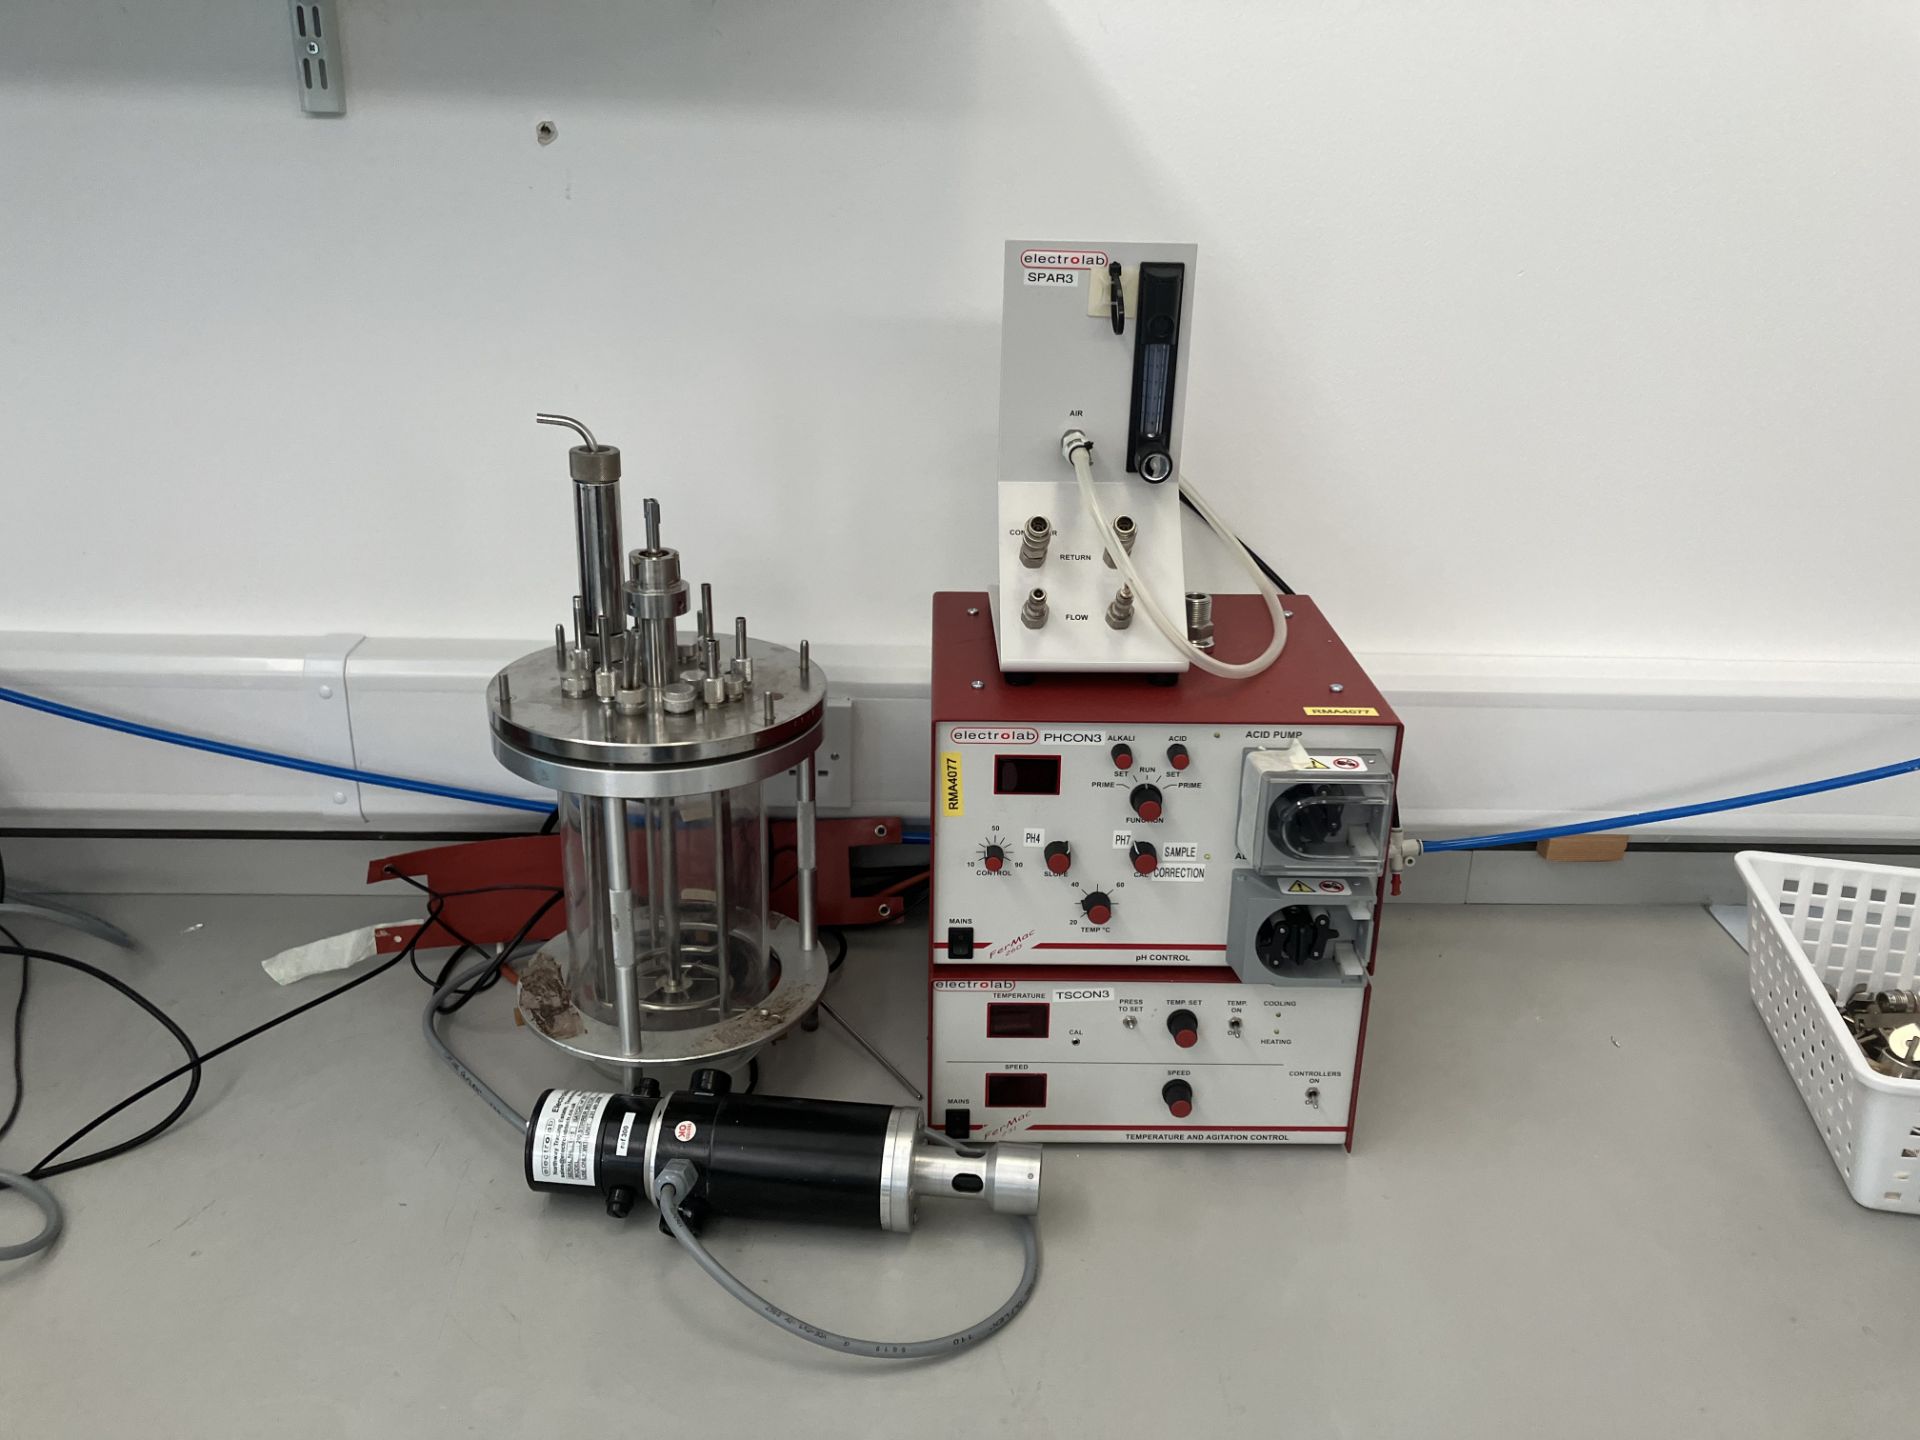 ElectroLab FerMac acid pumps with FerMac 260 pH controller, FerMac 231 temperature control module